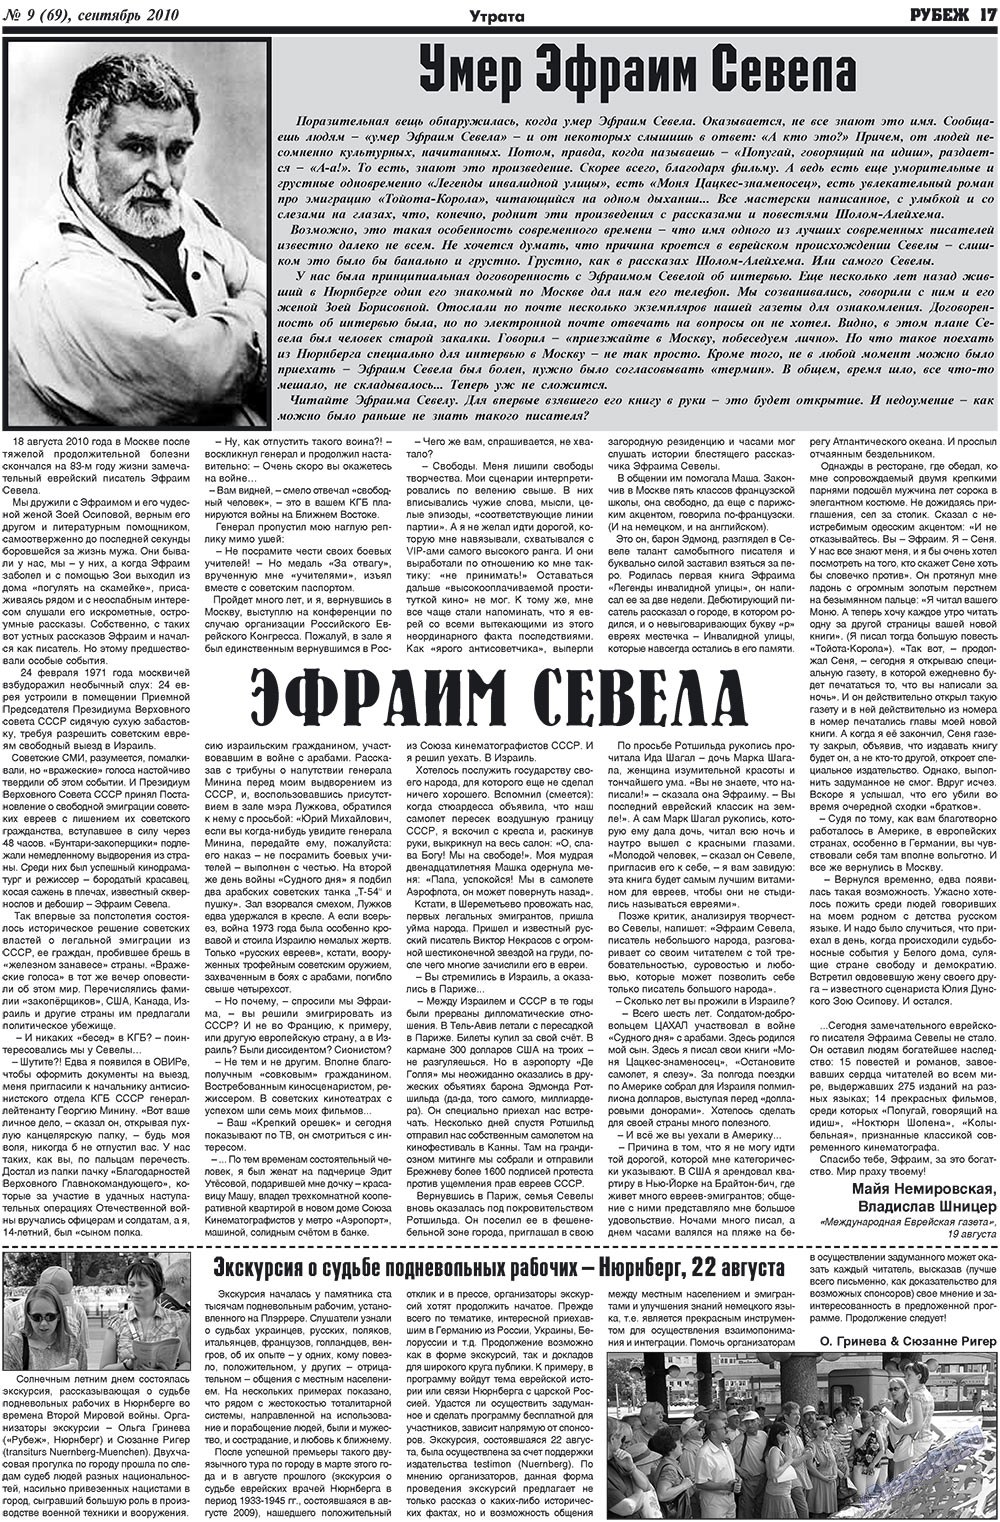 Рубеж, газета. 2010 №9 стр.17